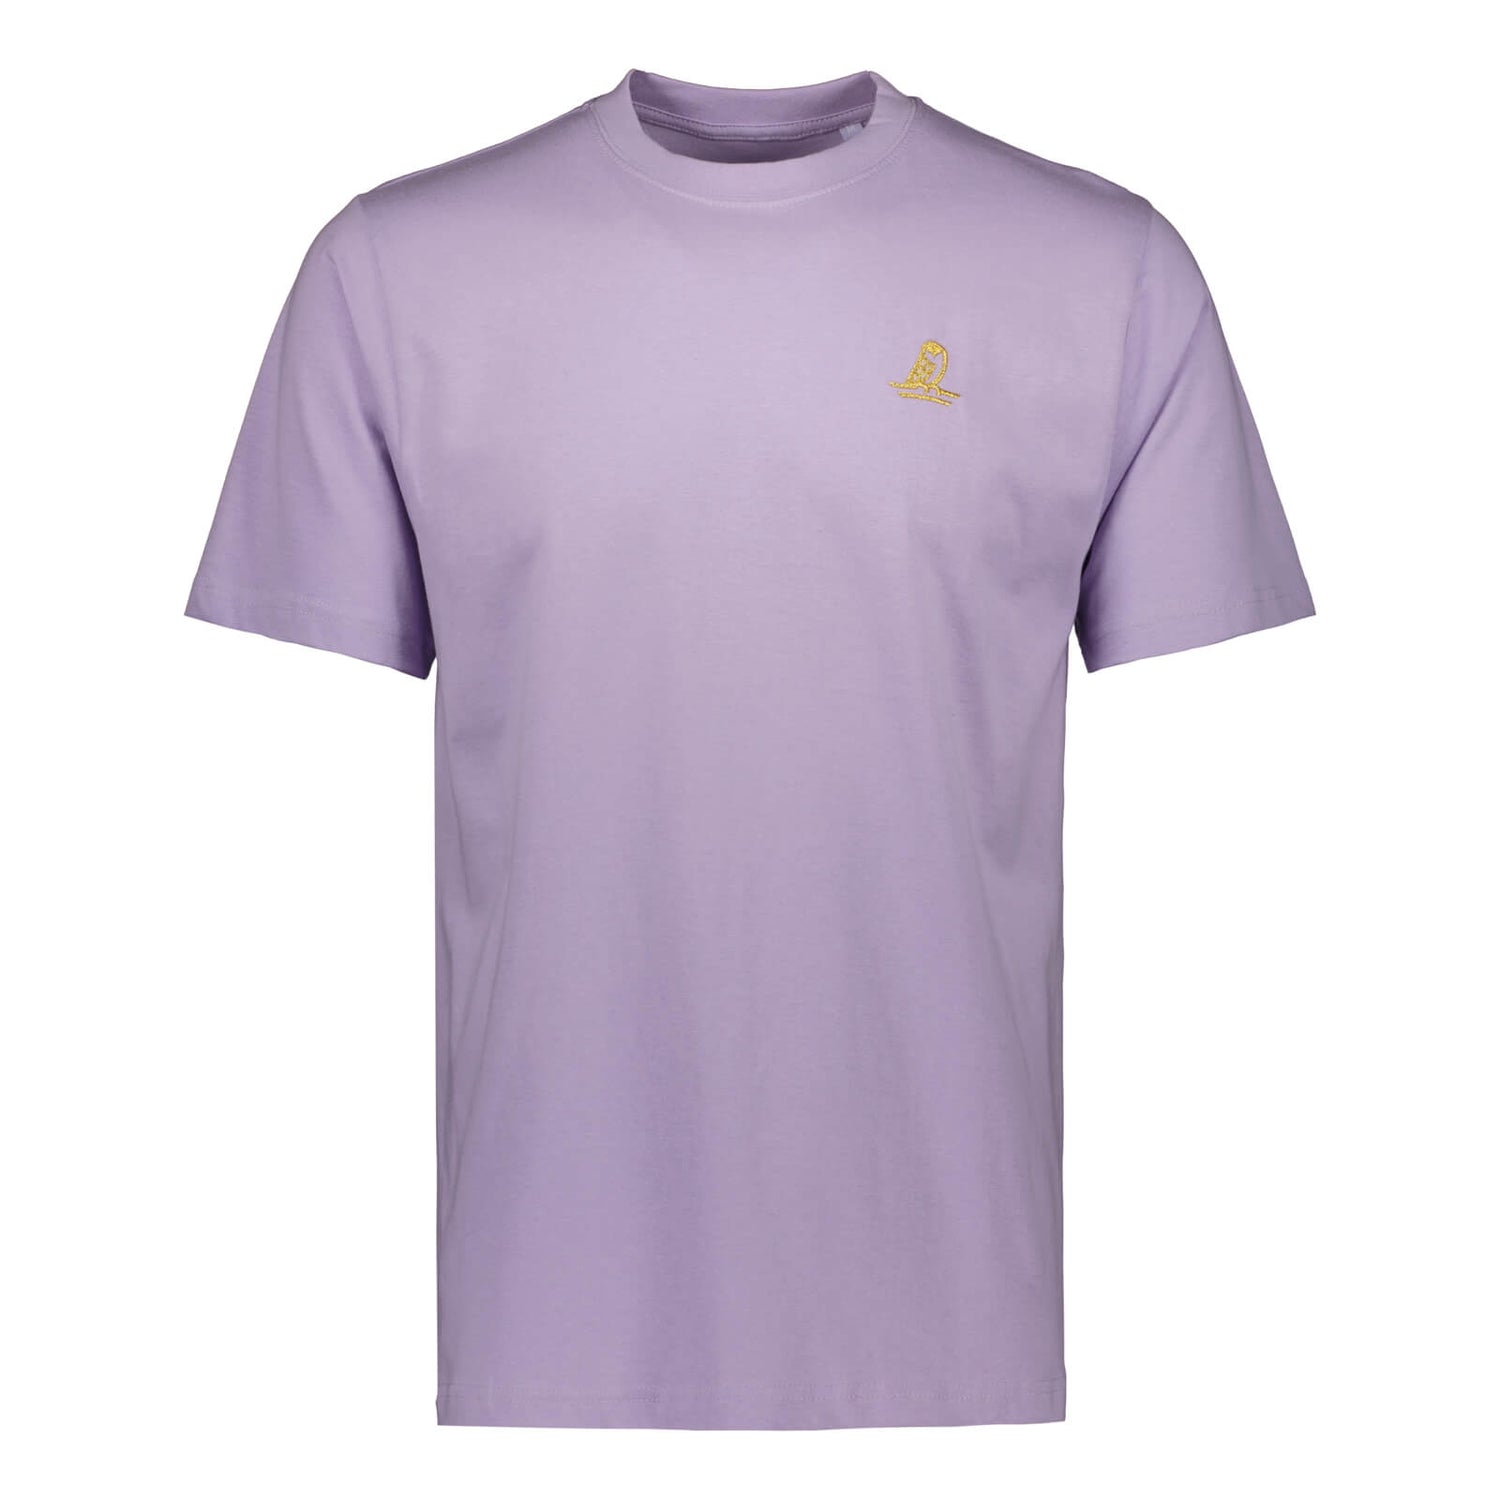 Pearl t-shirt, Lavender